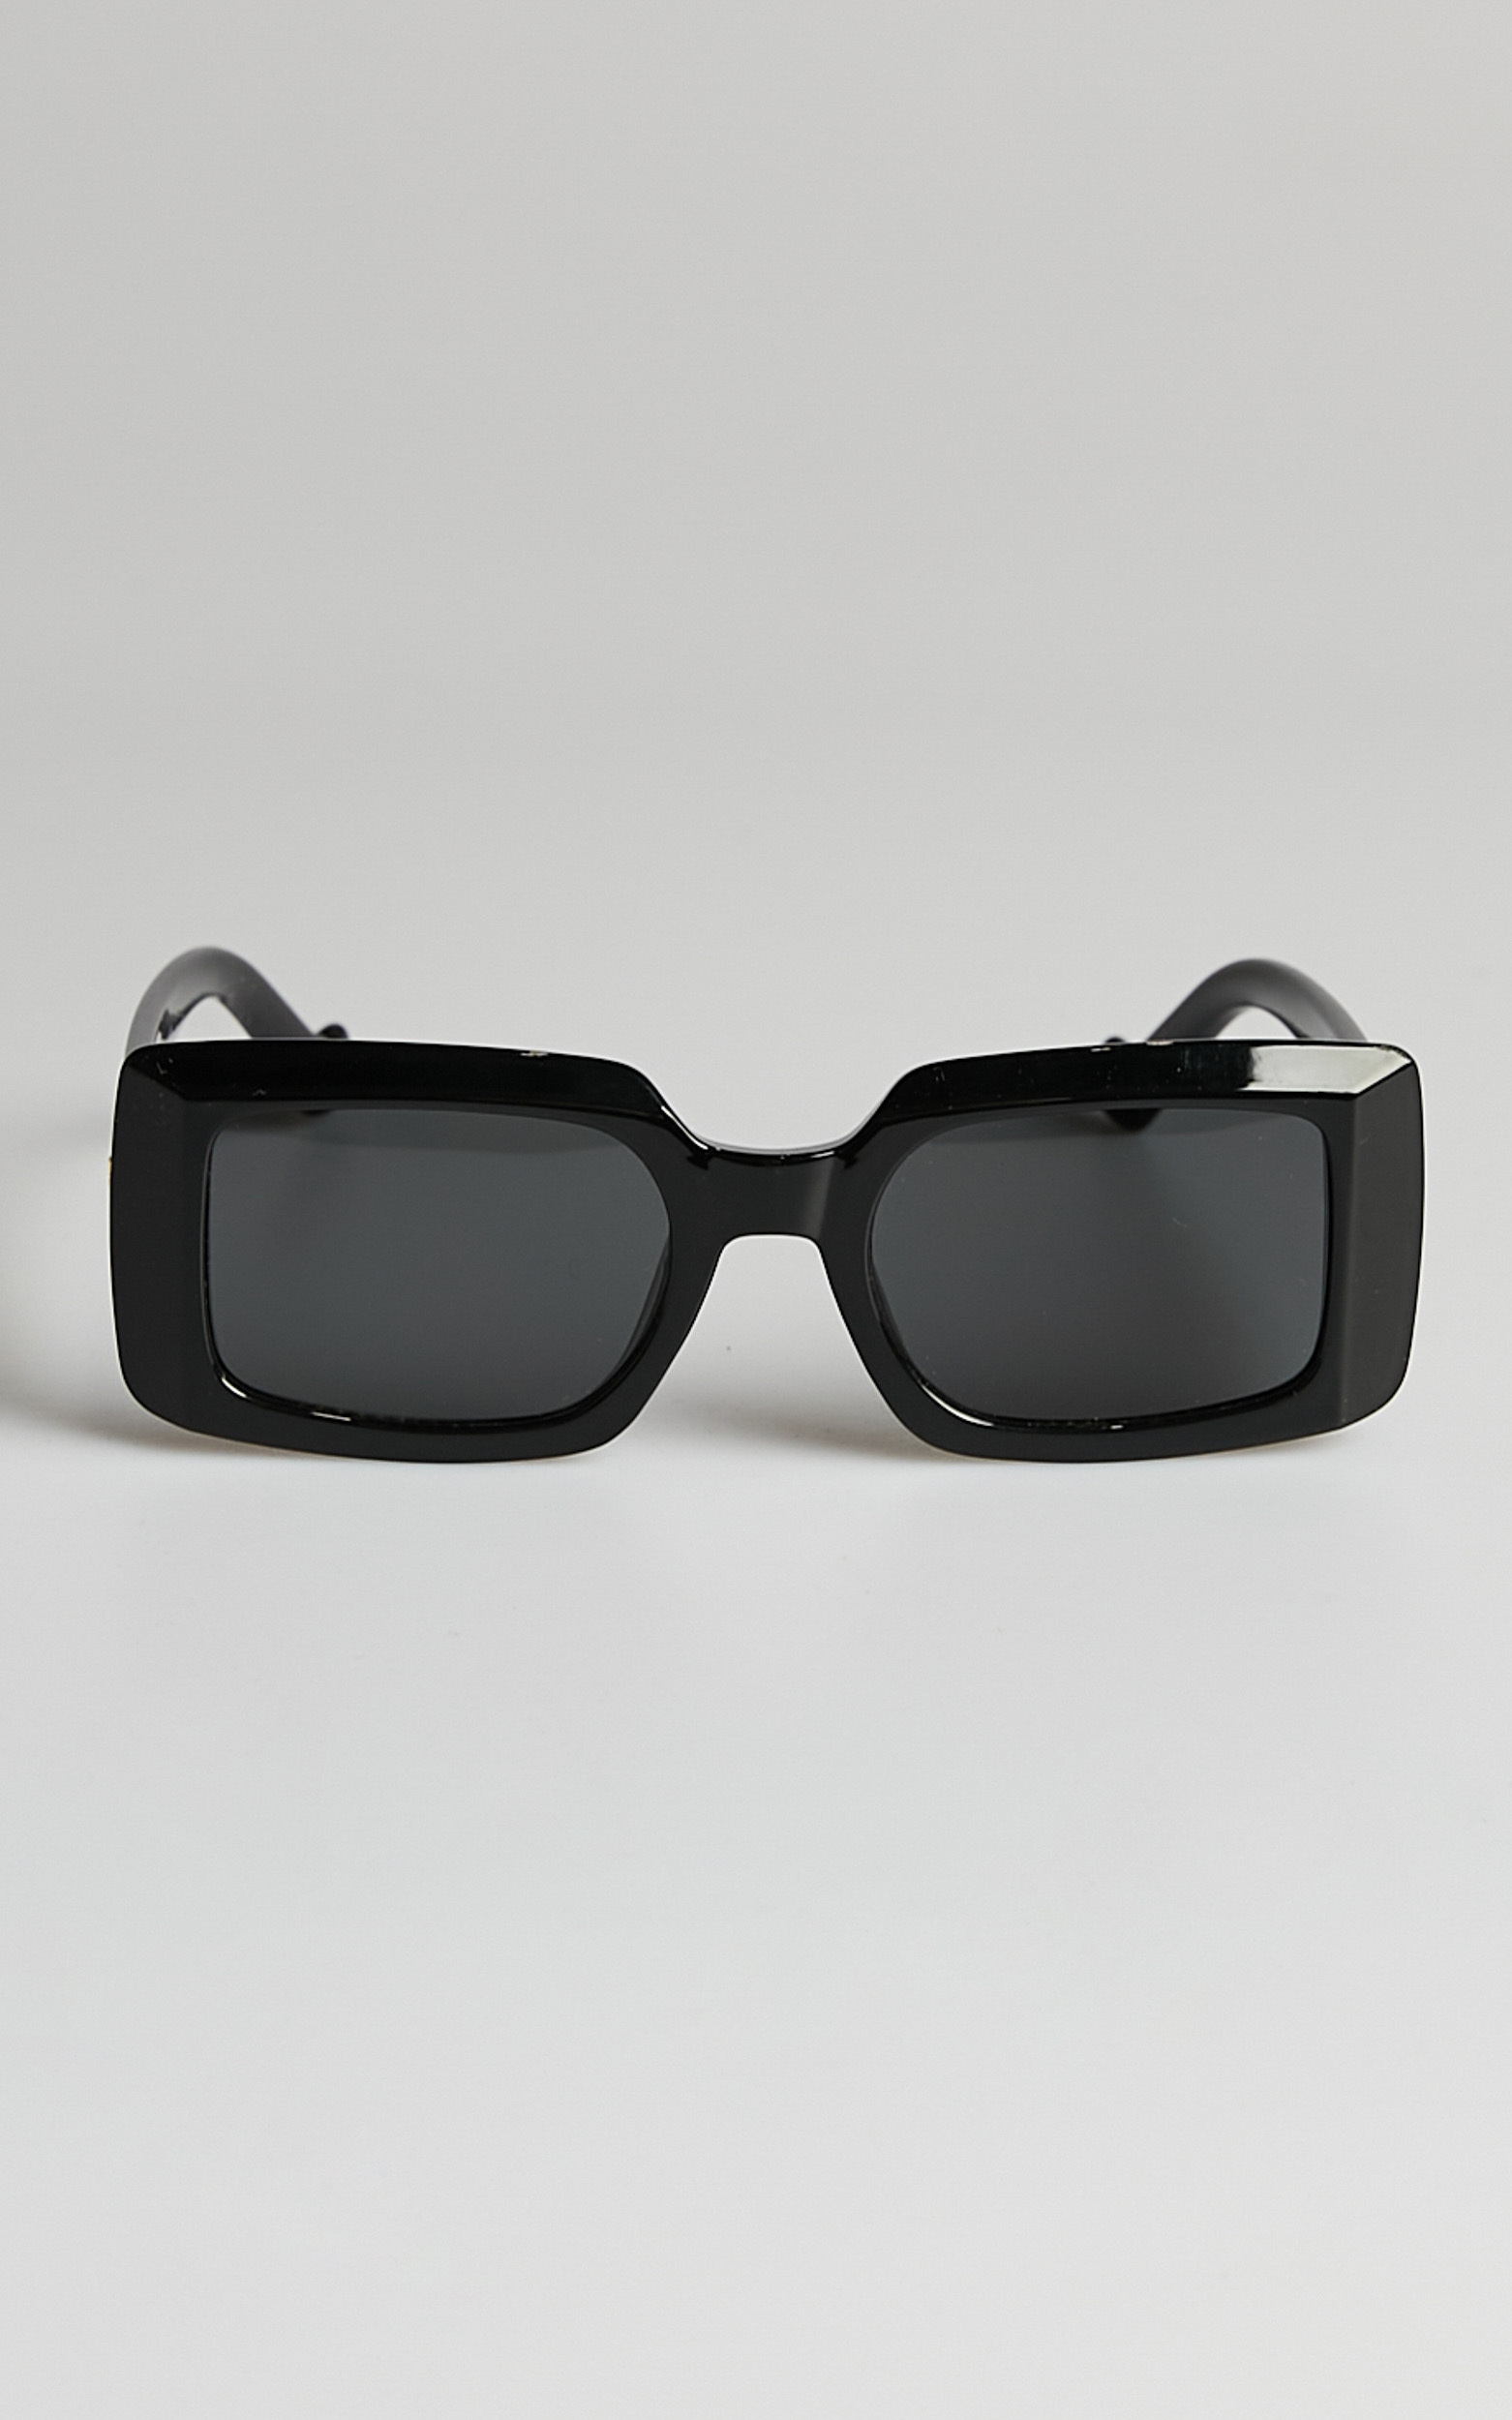 Peta and Jain - Lopez Sunglasses in Black Frame Black Lens - NoSize, BLK1, hi-res image number null